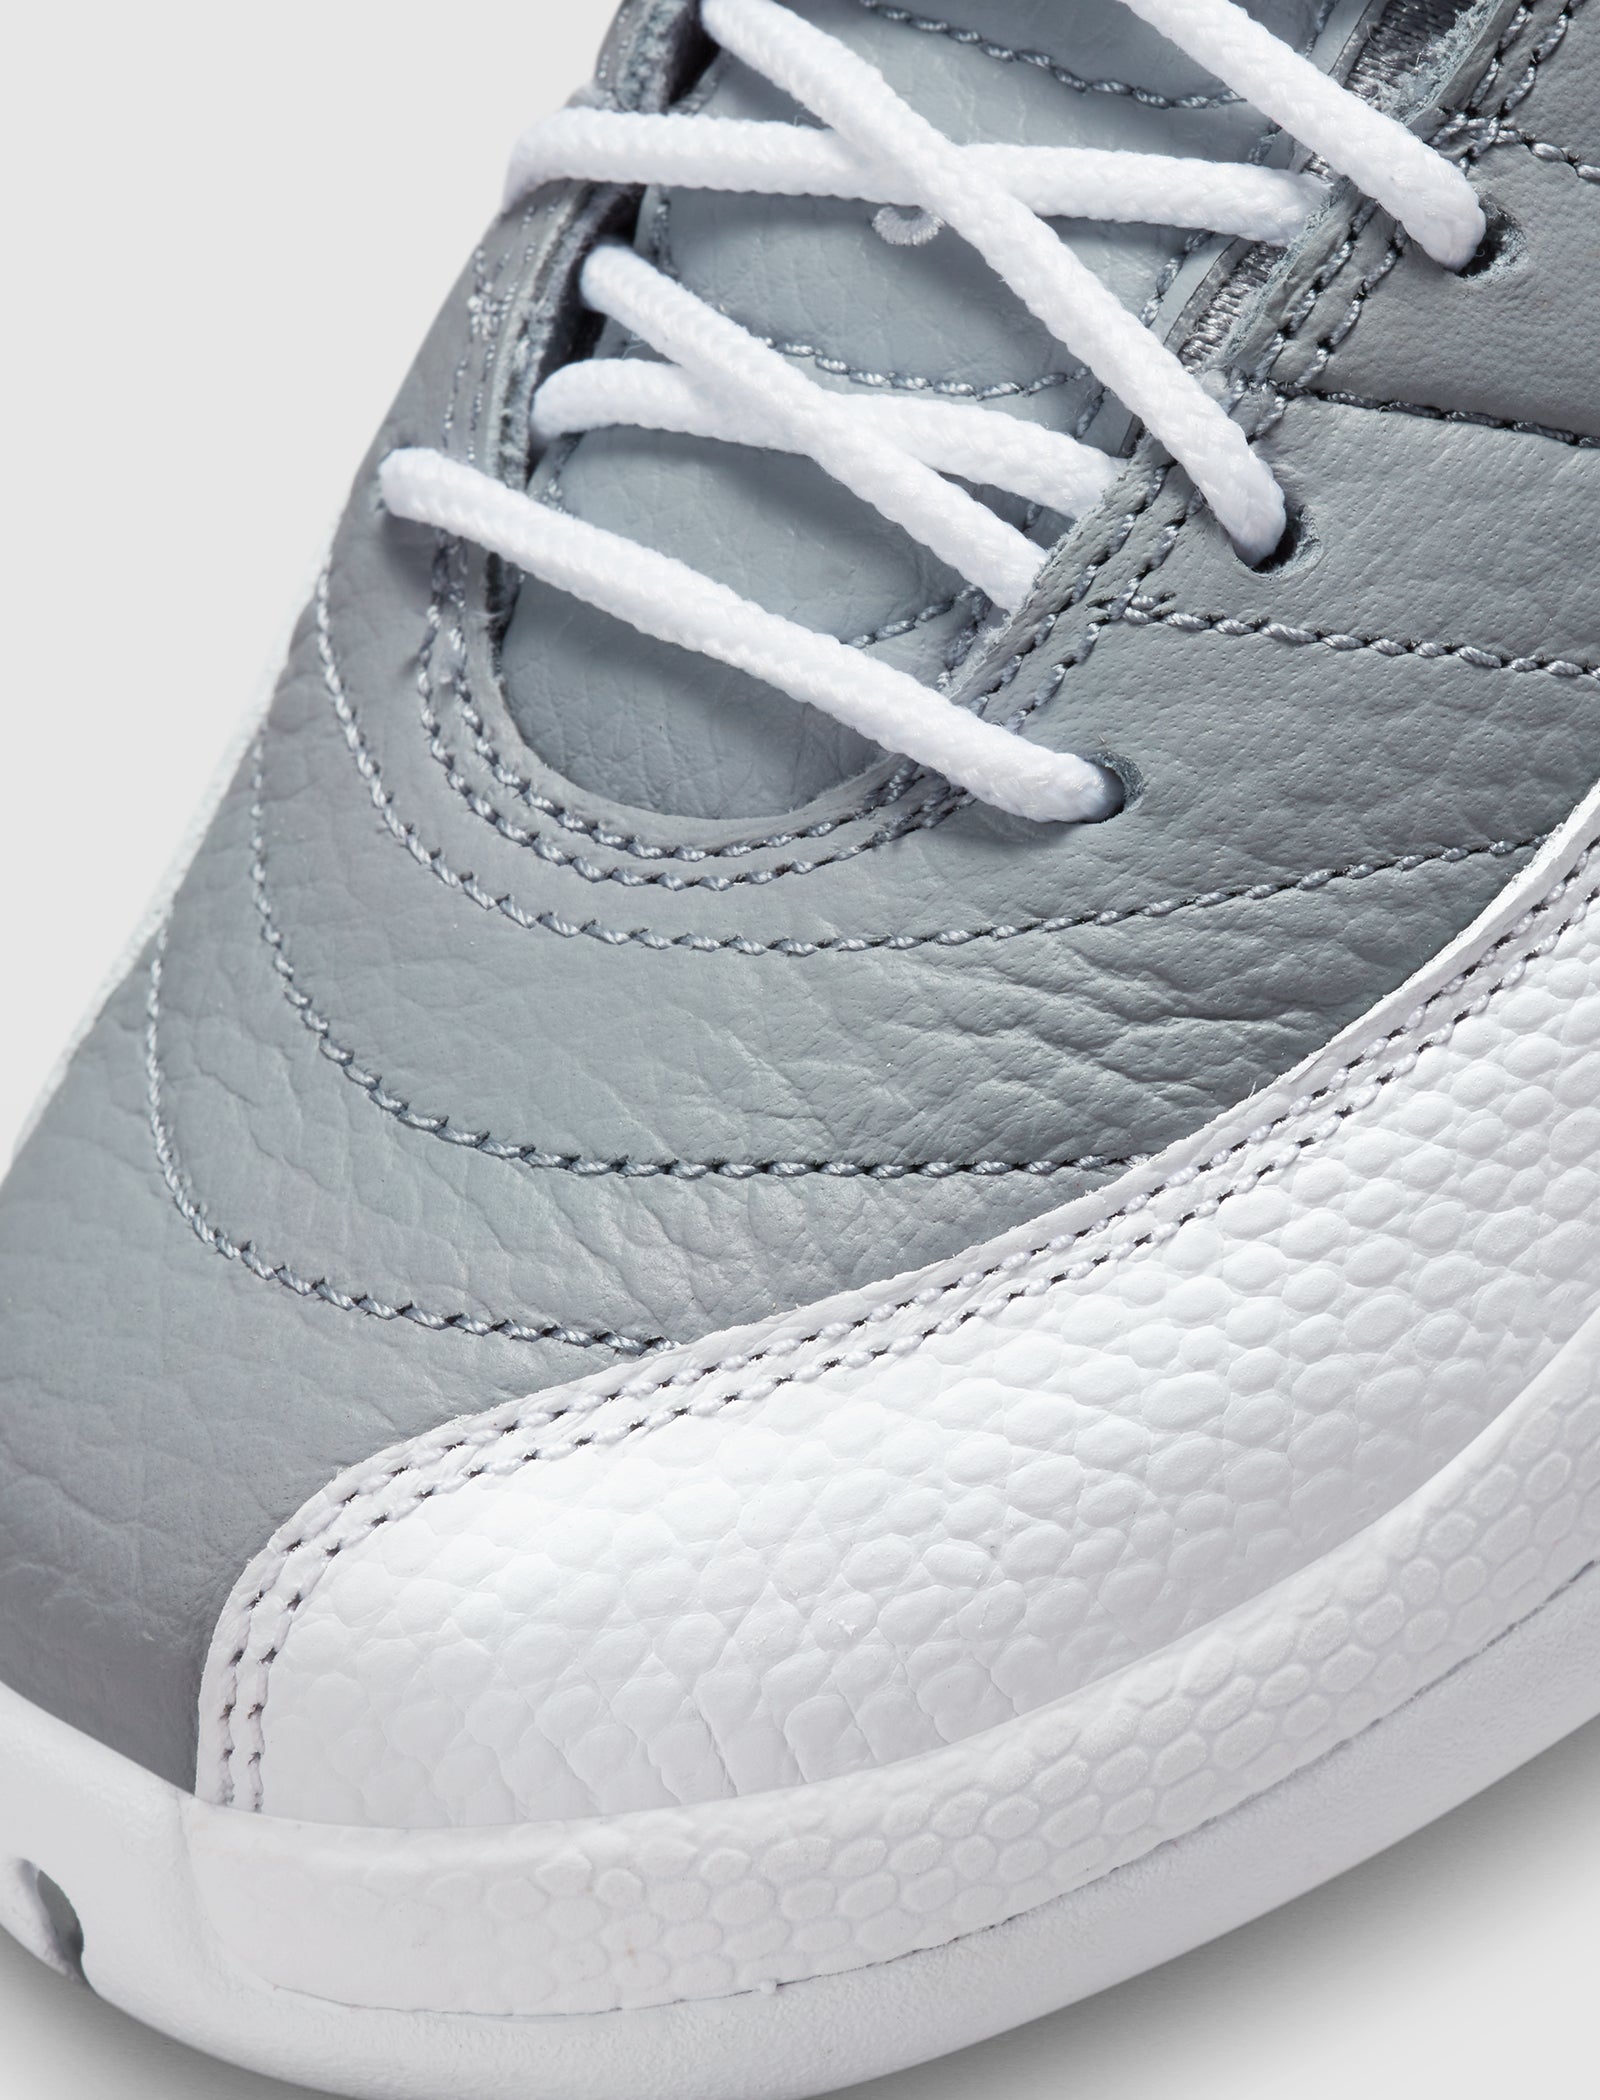 Air Jordan 12 Retro Low 'Wolf Grey'. Nike SNKRS